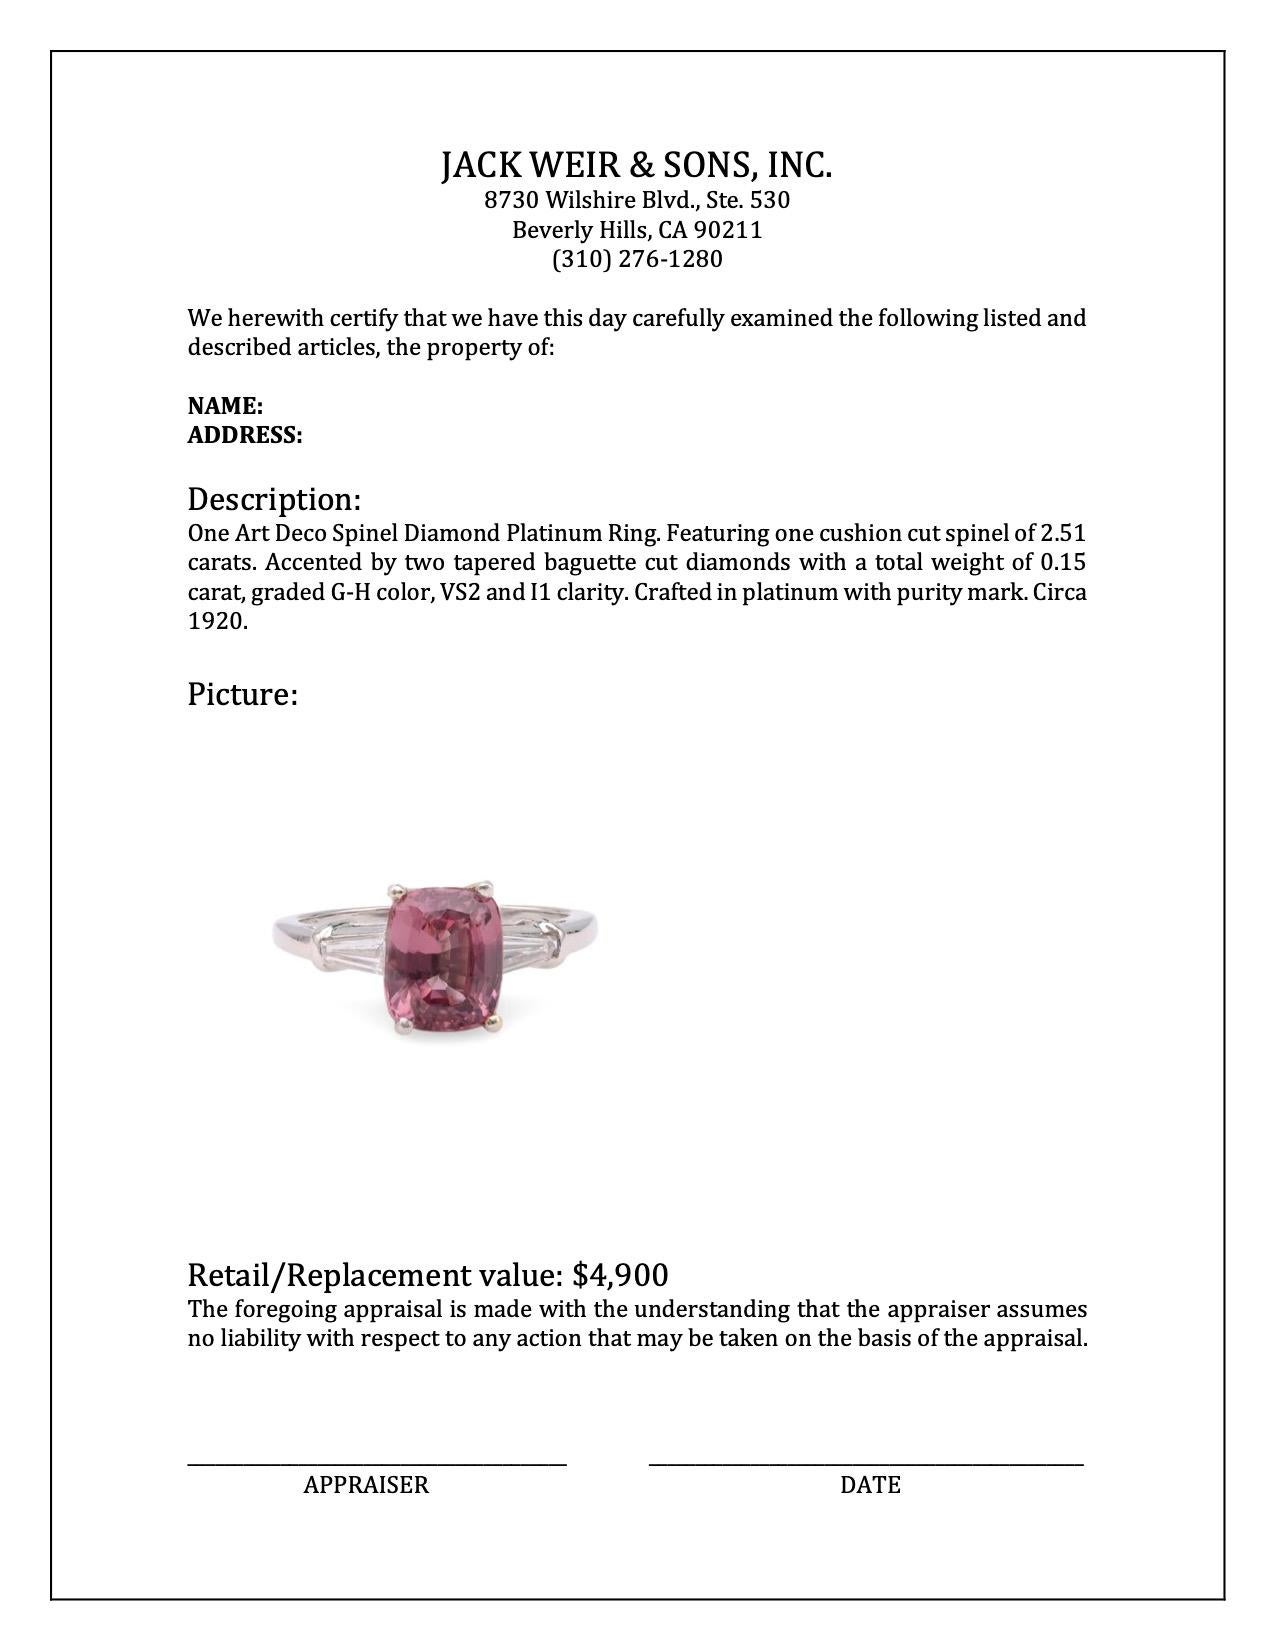 Women's or Men's Mid-Century 2.51 Carat Spinel Diamond Platinum Ring For Sale